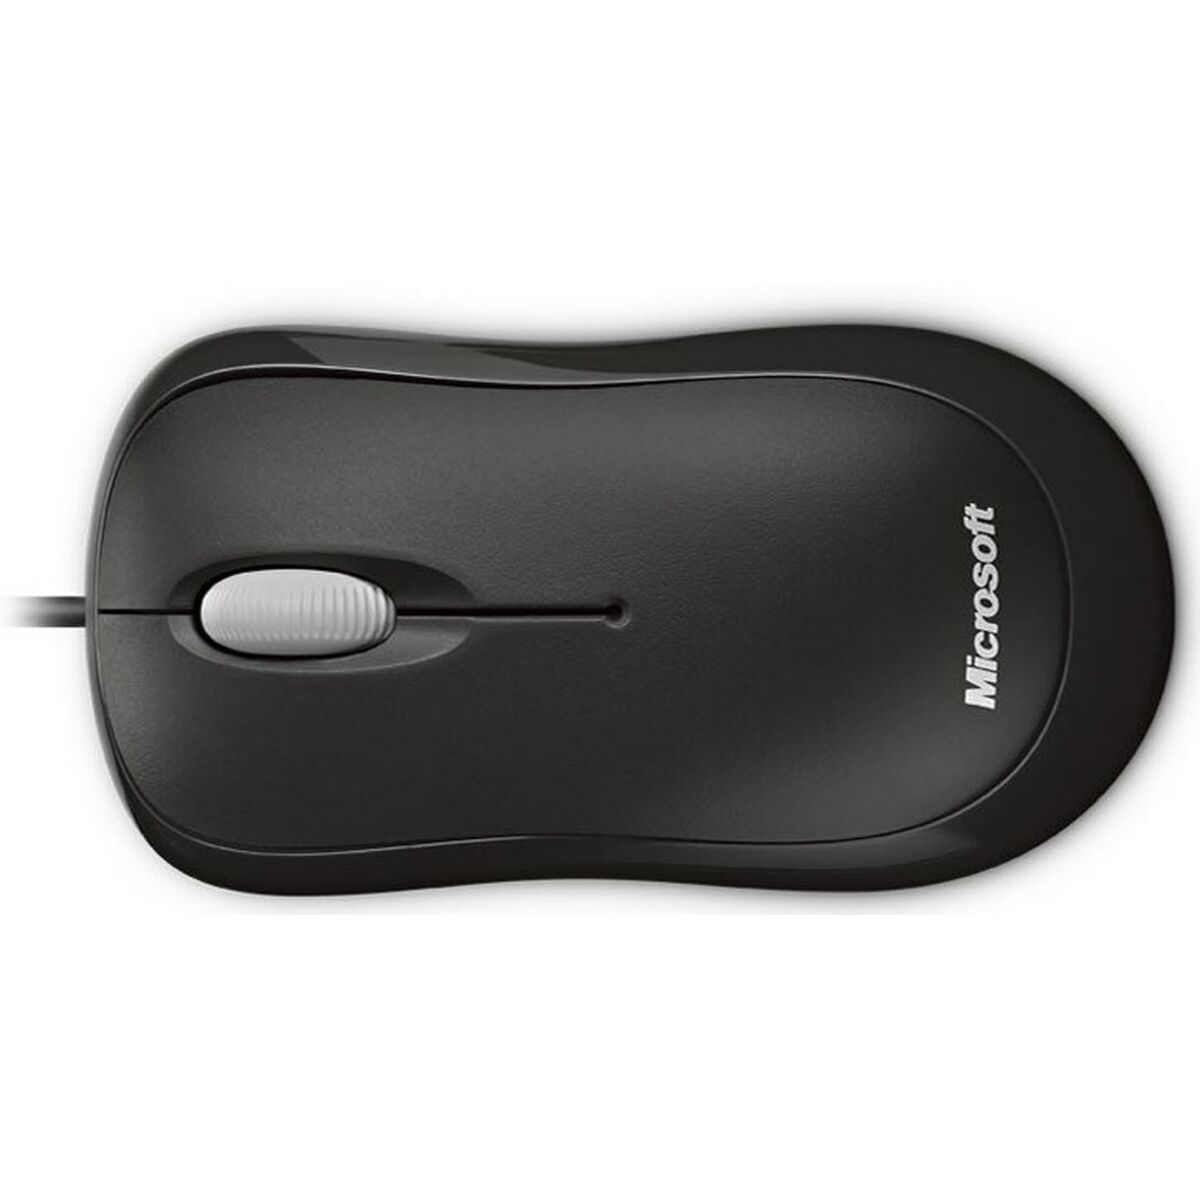 Optical mouse Microsoft P58-00057 Black (1 Unit)